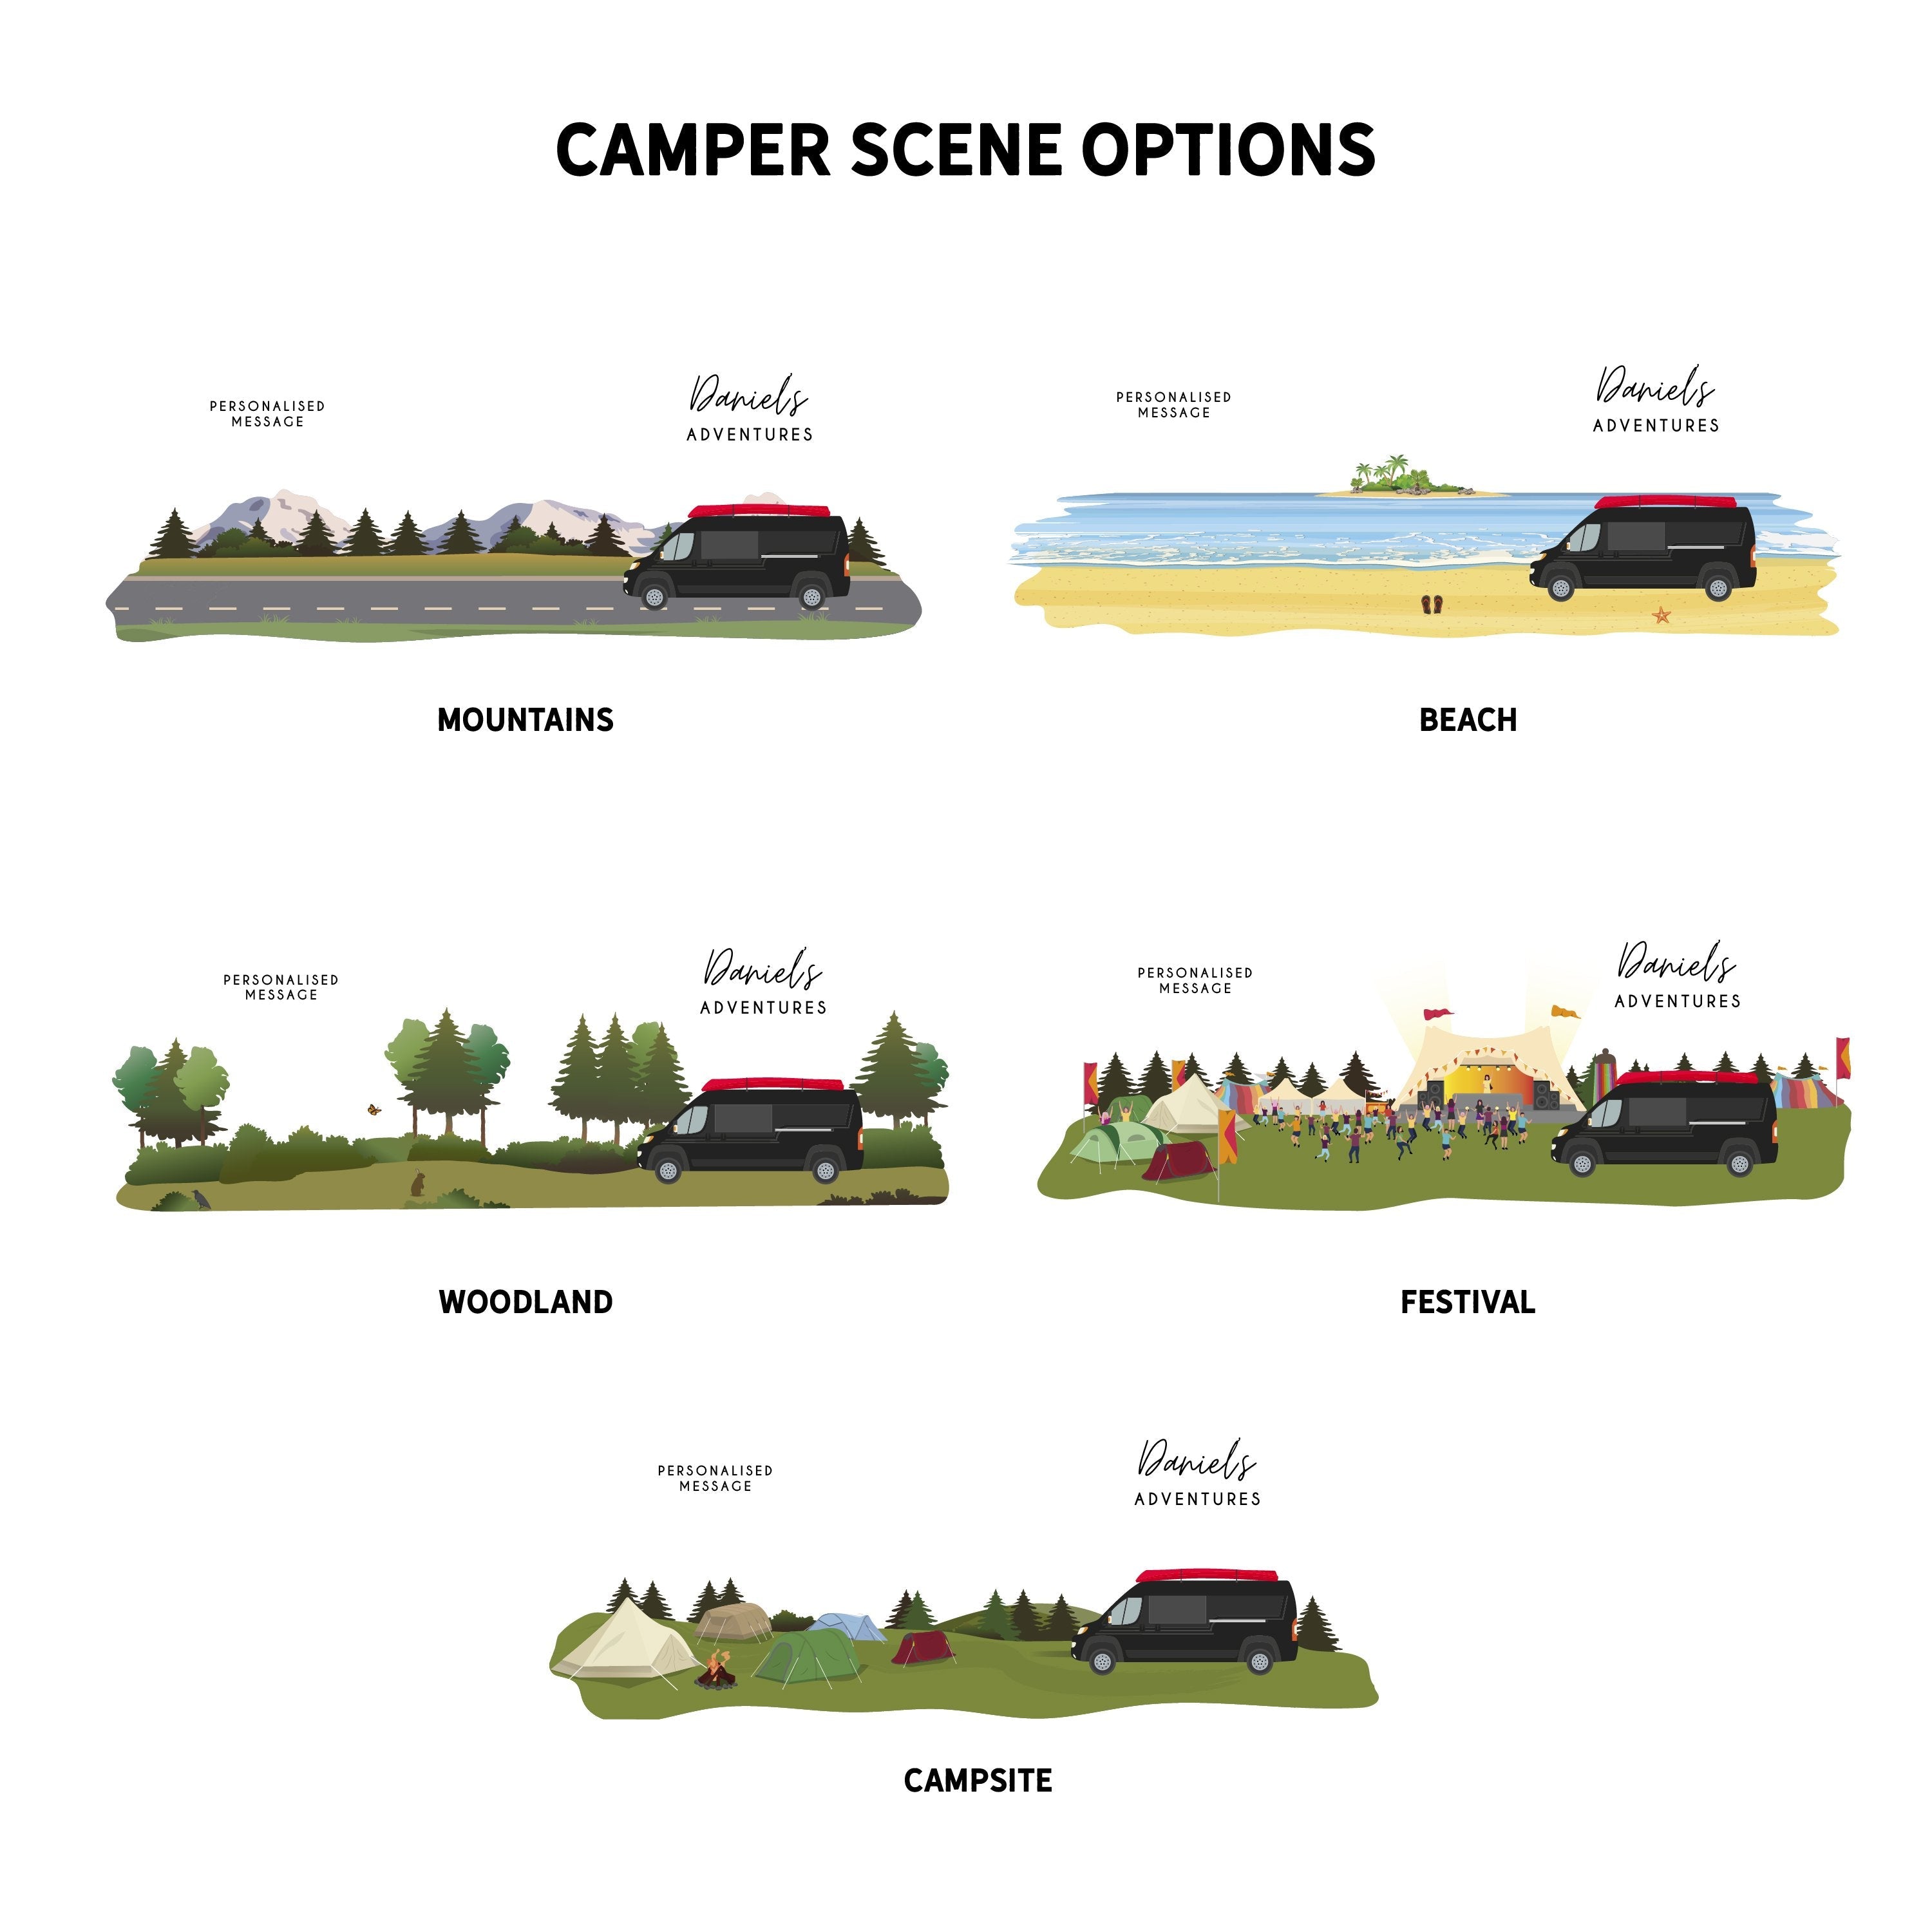 Oakdene Designs Mugs Personalised Camper Van Mug